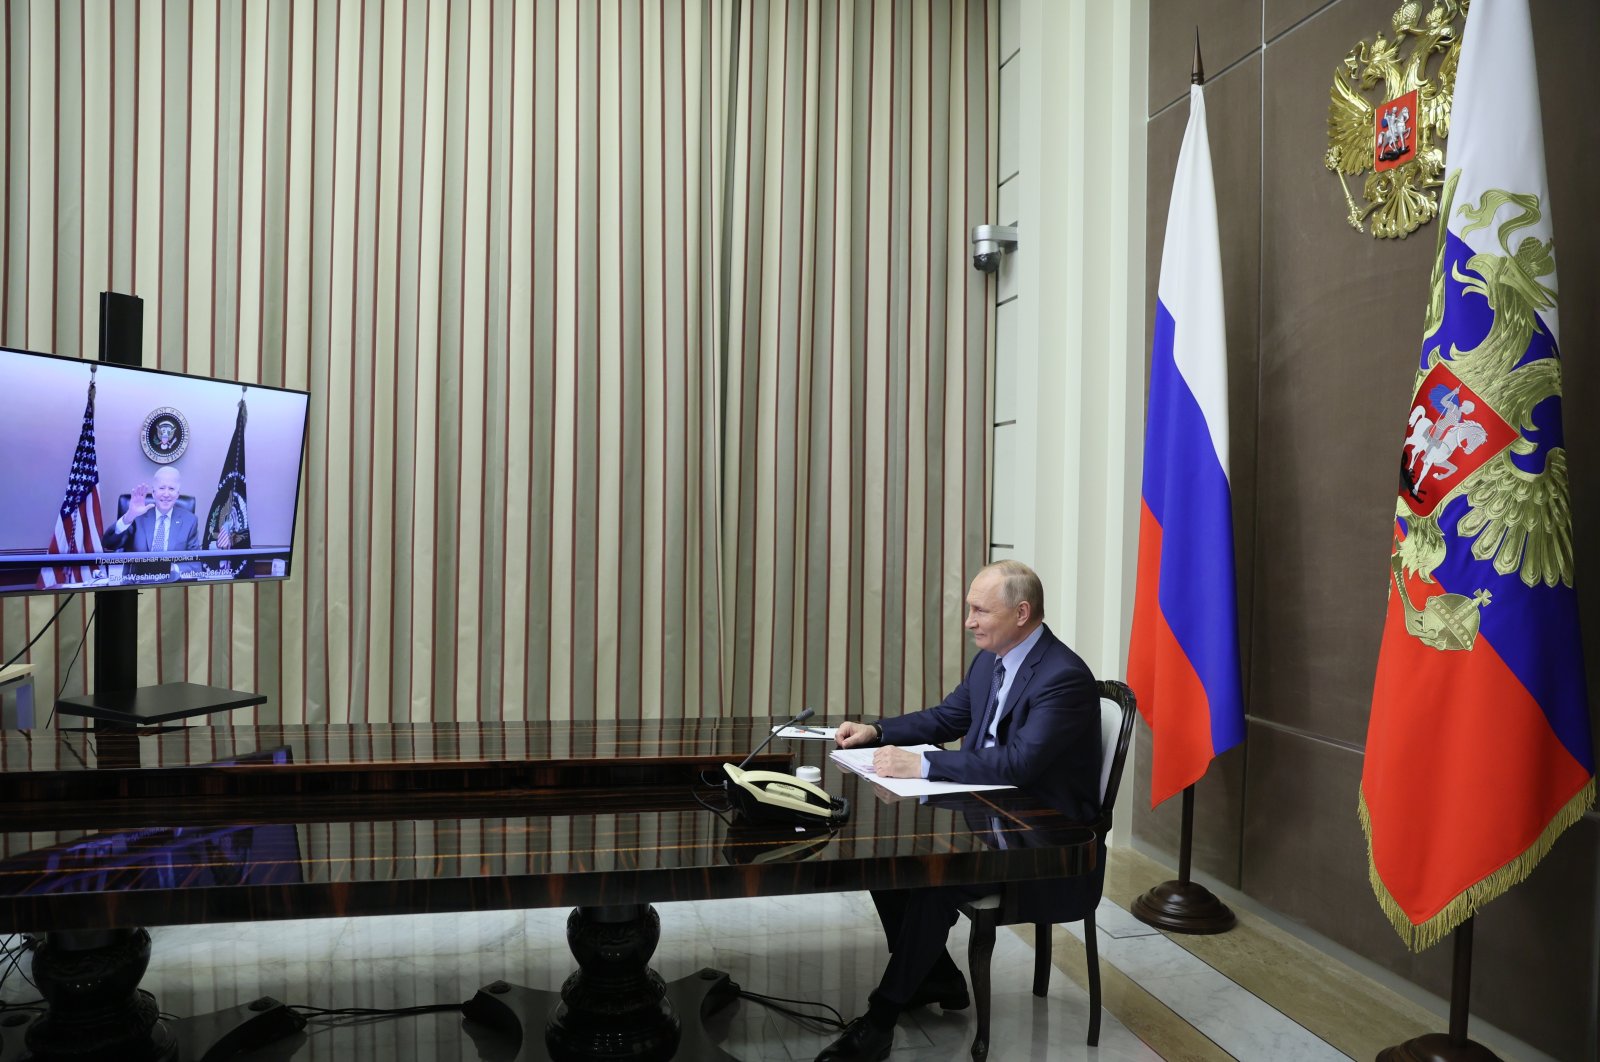 Russian President Vladimir Putin holds talks with U.S. President Joe Biden via videoconference at the Bocharov Ruchei residence in Sochi, Russia, Dec. 7, 2021. (Kremlin via EPA)